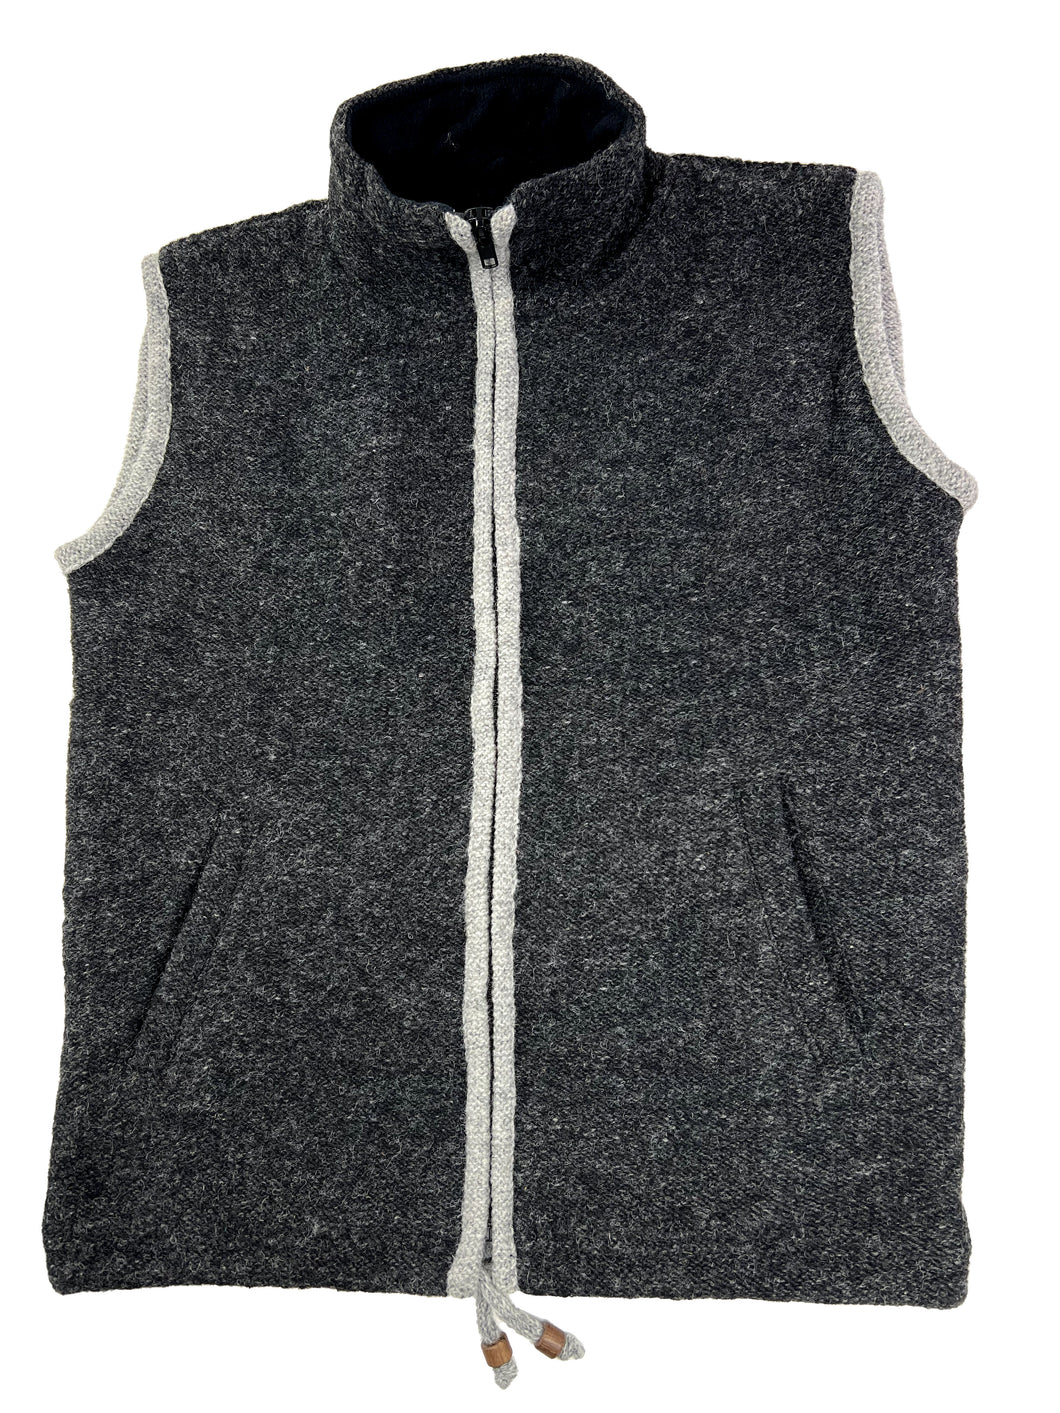 Hand knitted woolen sleeveless jacket/sweater with soft inner fleece